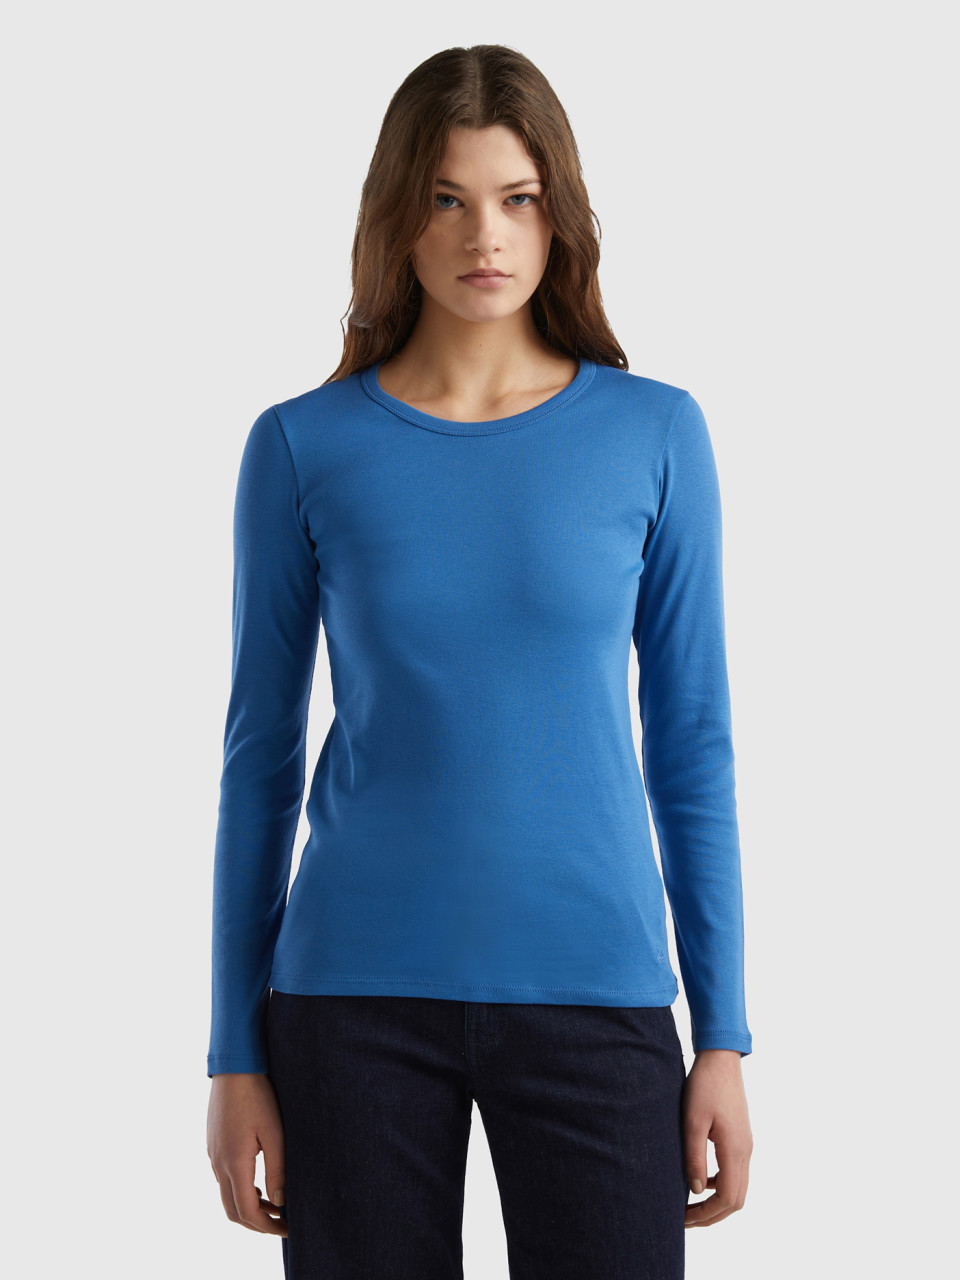 Benetton, Camiseta De Manga Larga De Algodón Puro, Azul, Mujer